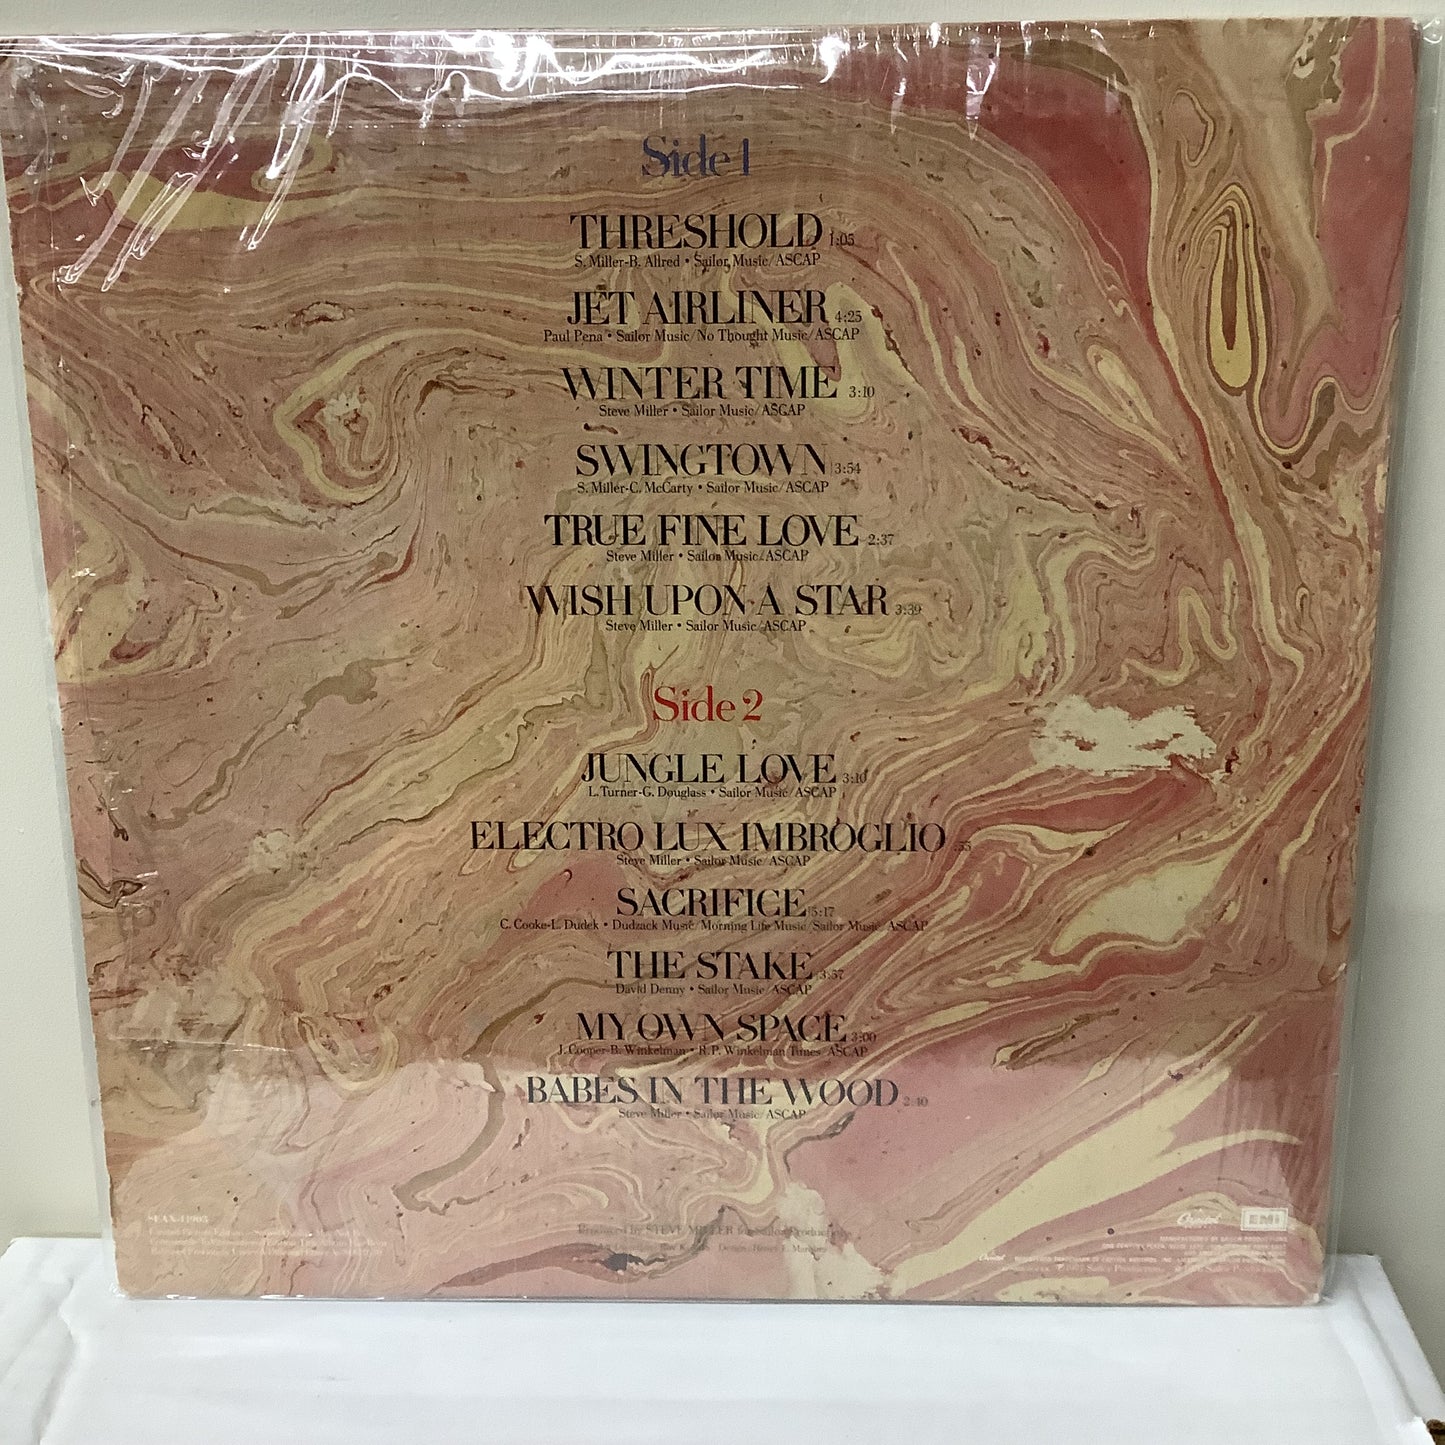 Steve Miller Band - Book of Dreams - Autographed Picture Disc LP